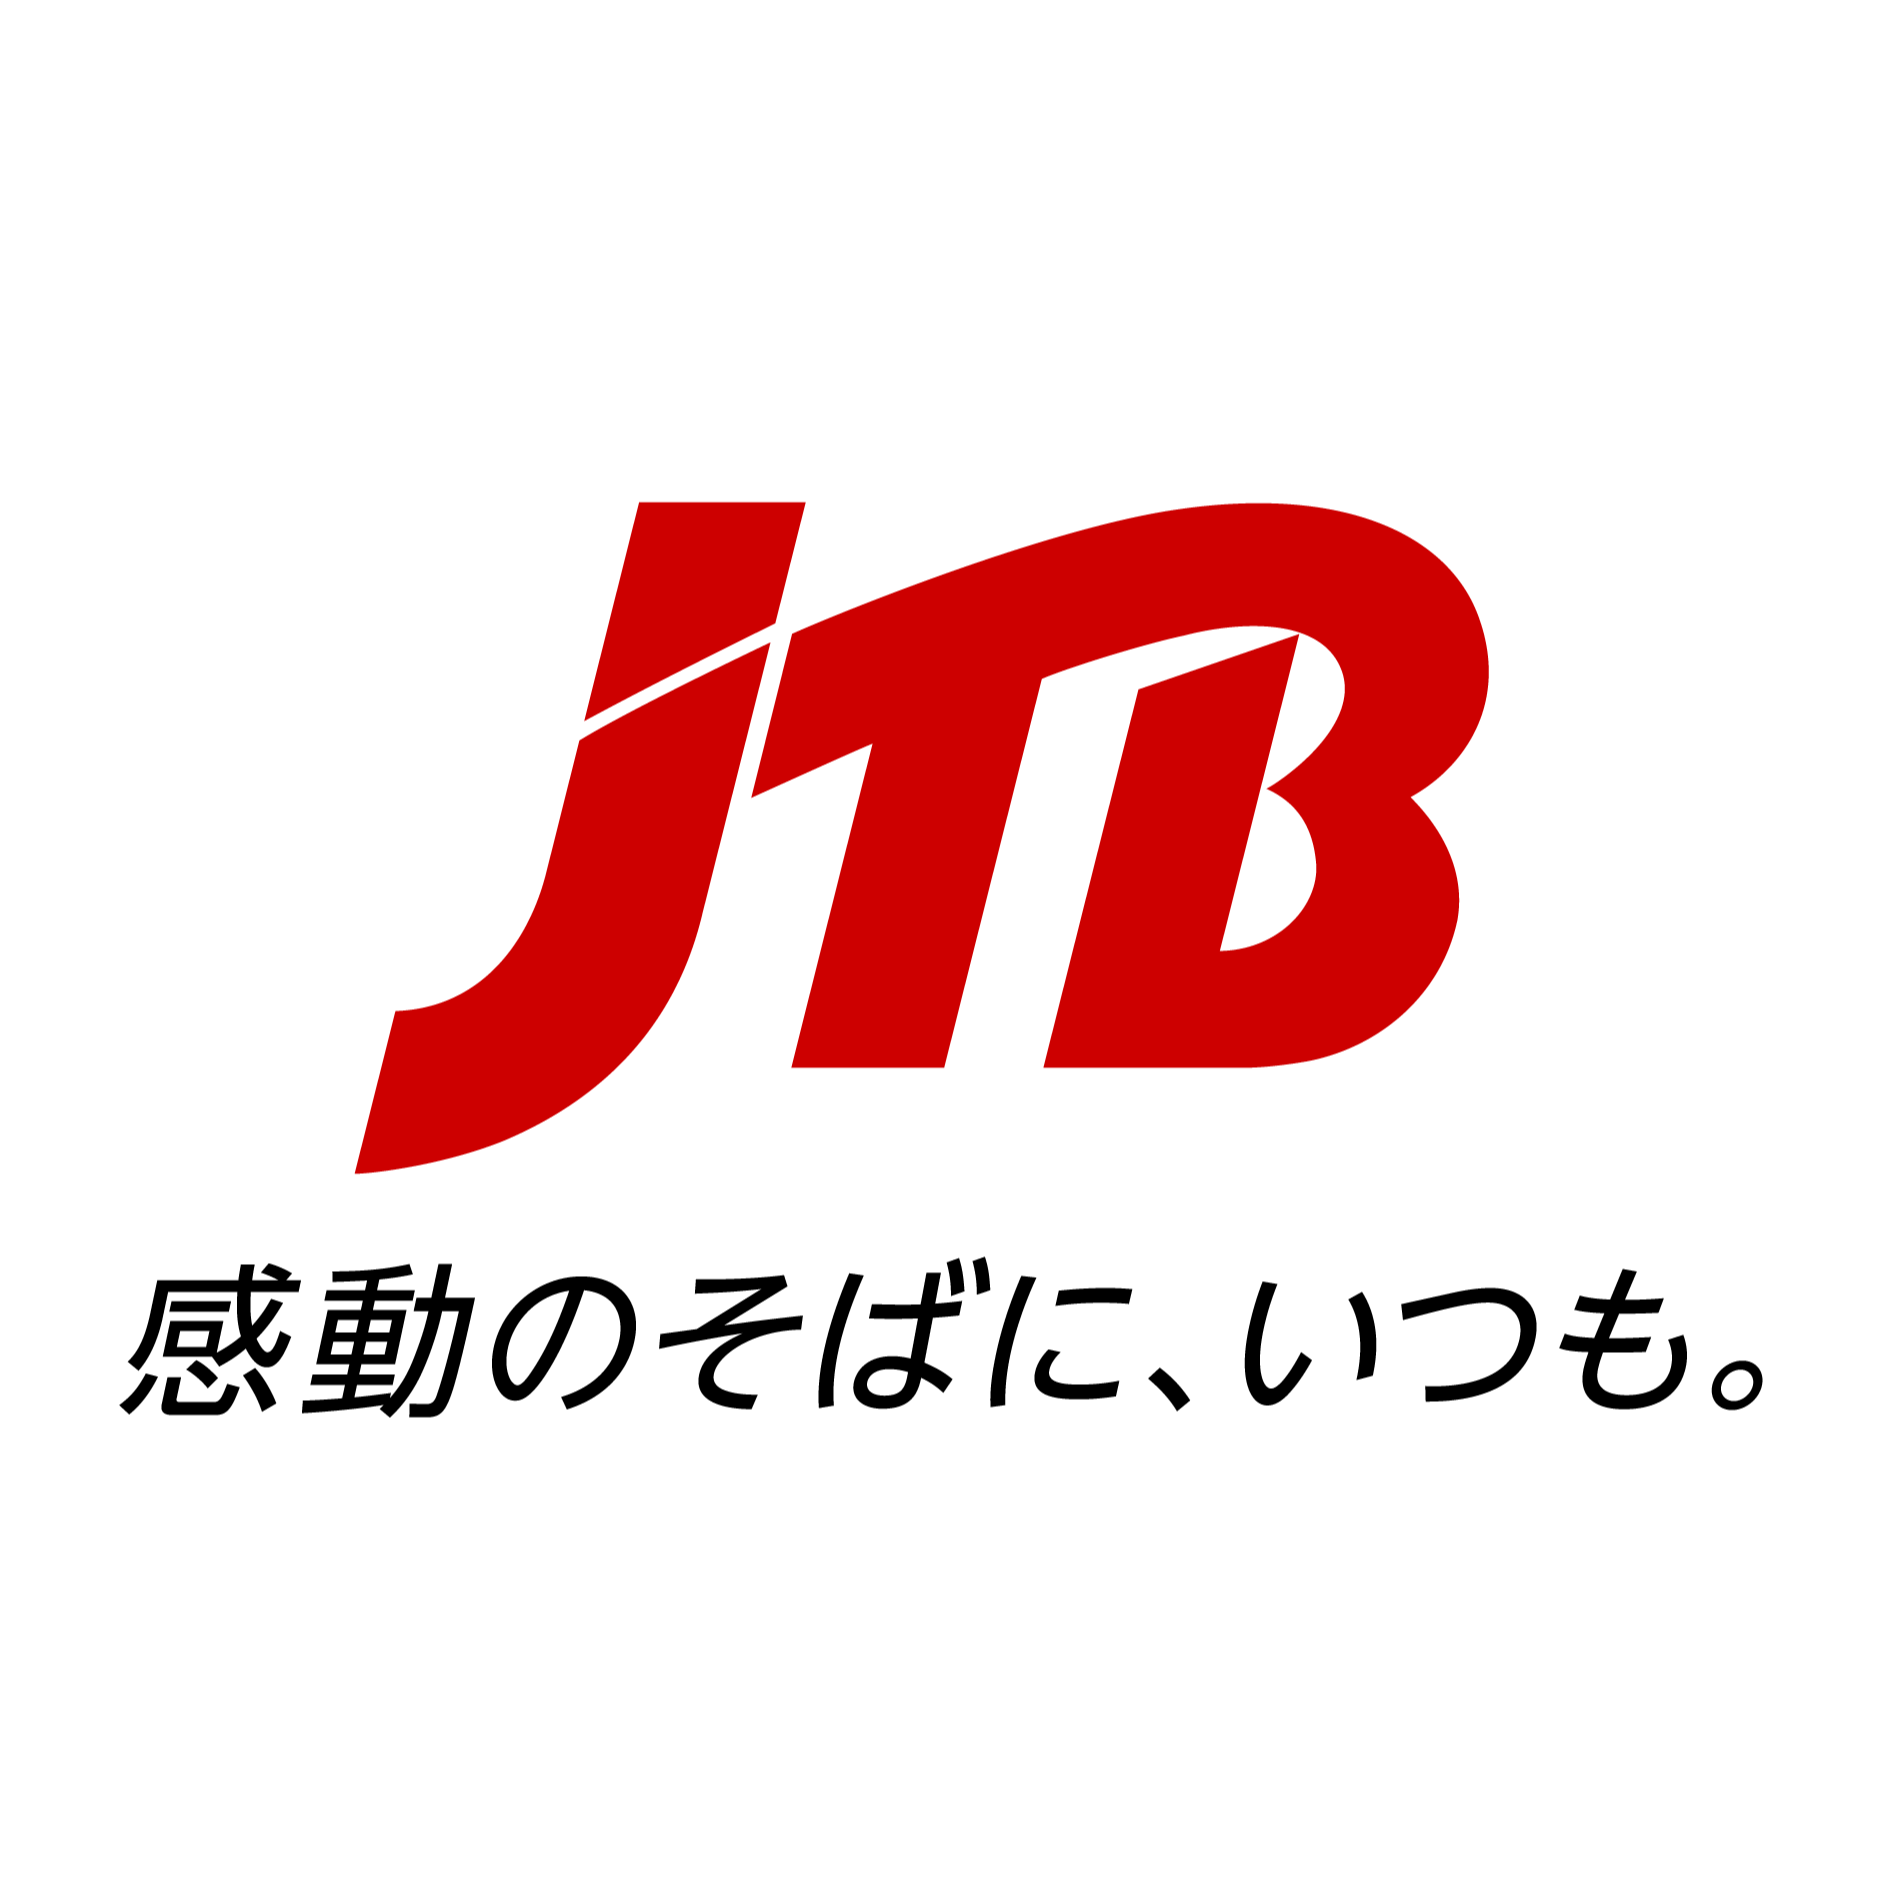 JTB ビジネスソリューション事業本部 東京中央支店 Logo